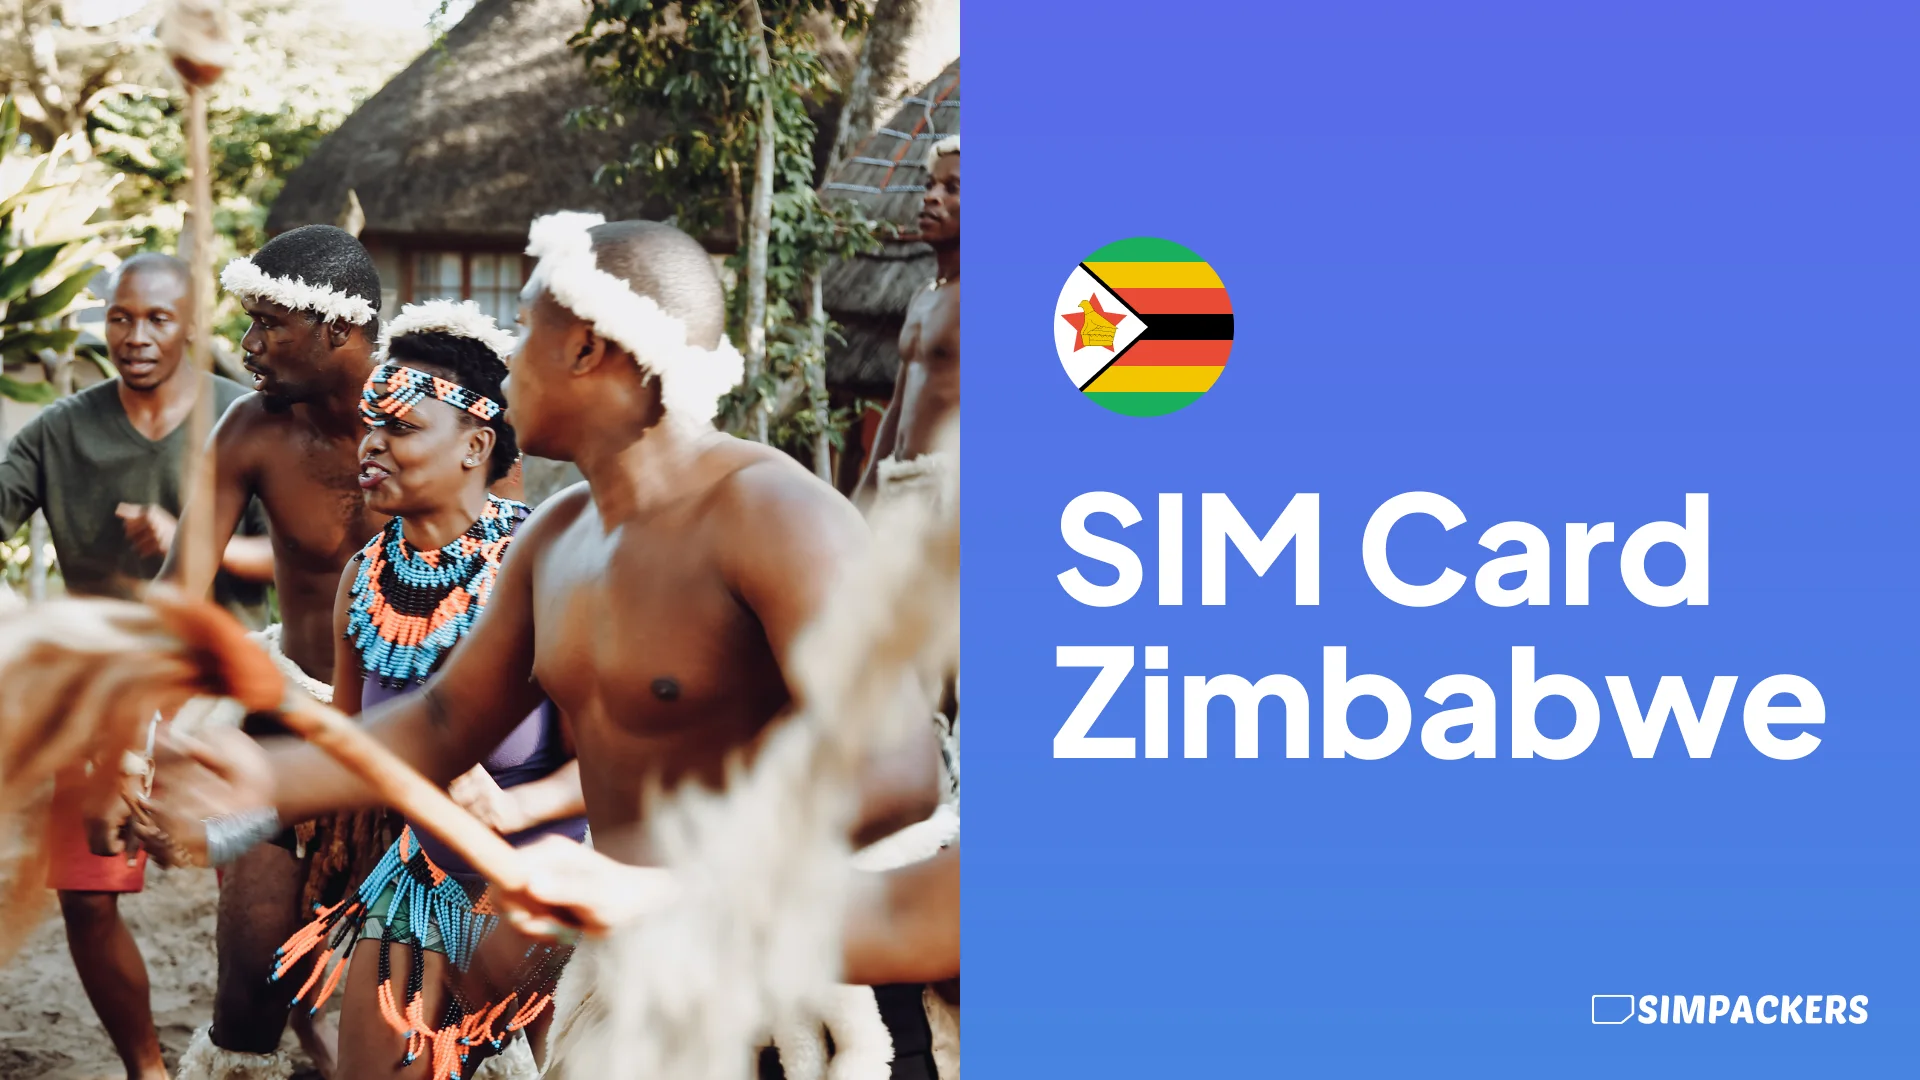 EN/FEATURED_IMAGES/sim-card-zimbabwe.webp